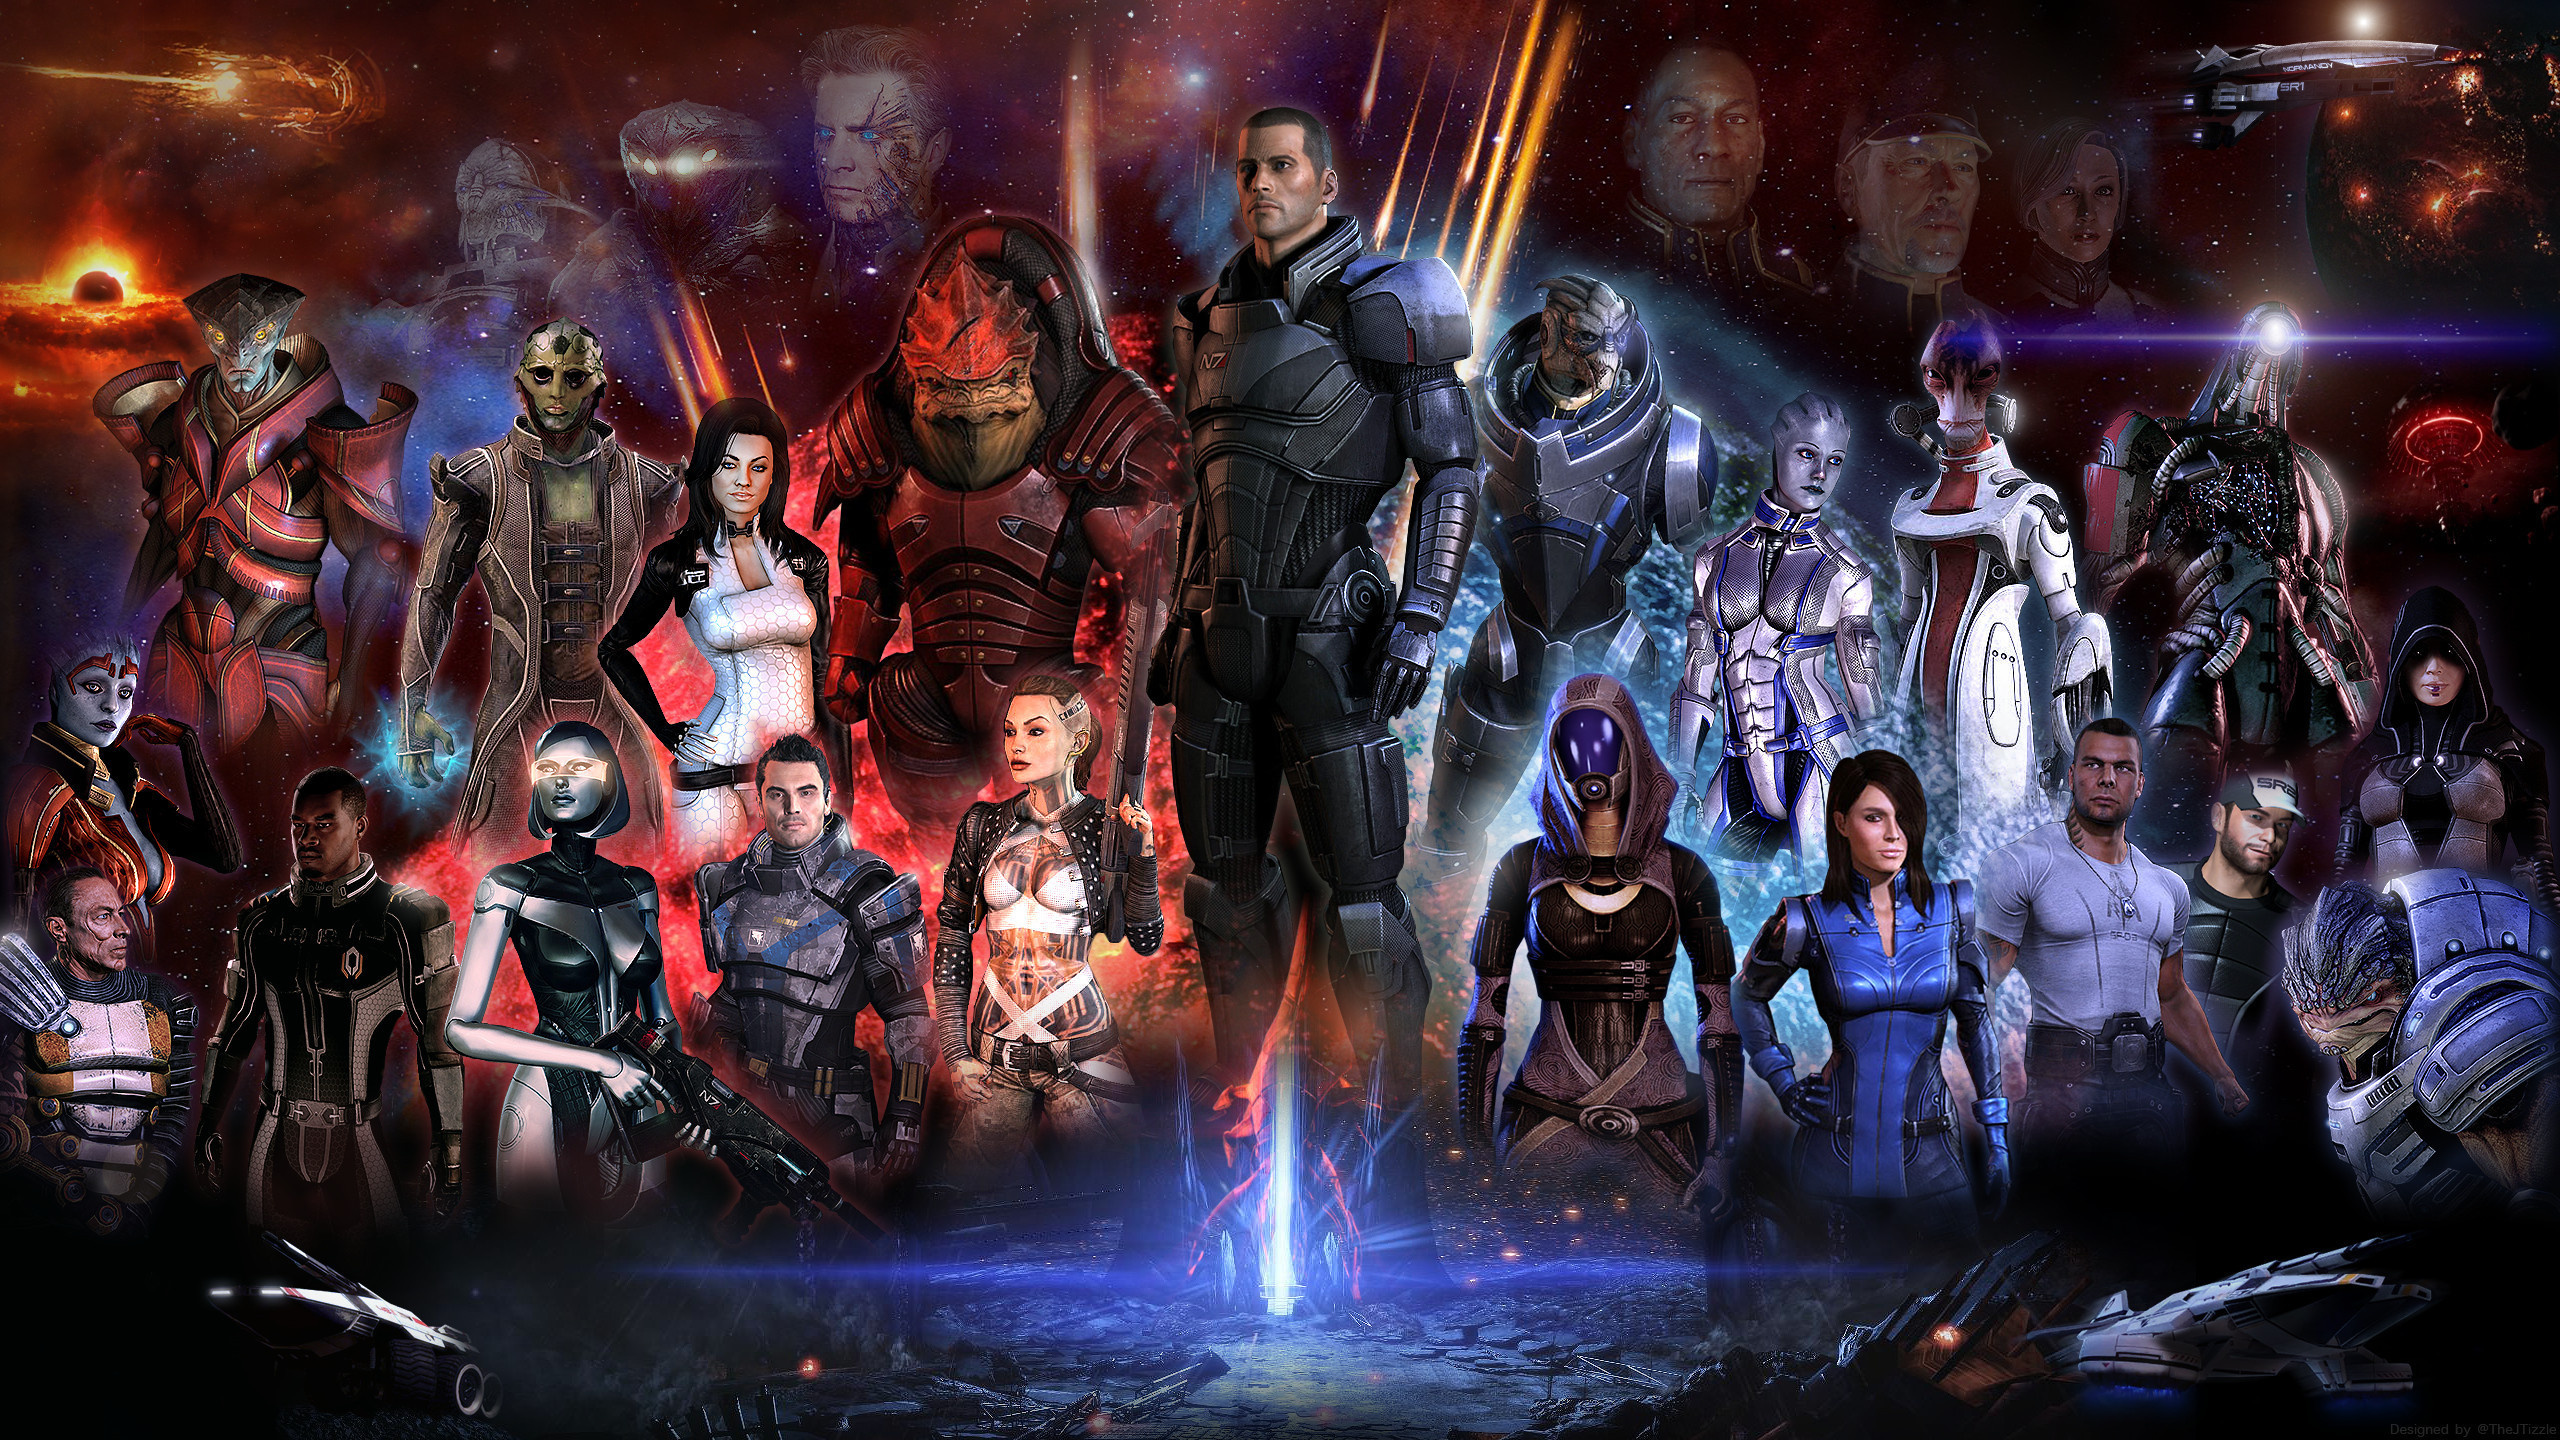 Mass Effect, N7 day celebration, Emotional gaming moments, Legendary game franchise, 2560x1440 HD Desktop